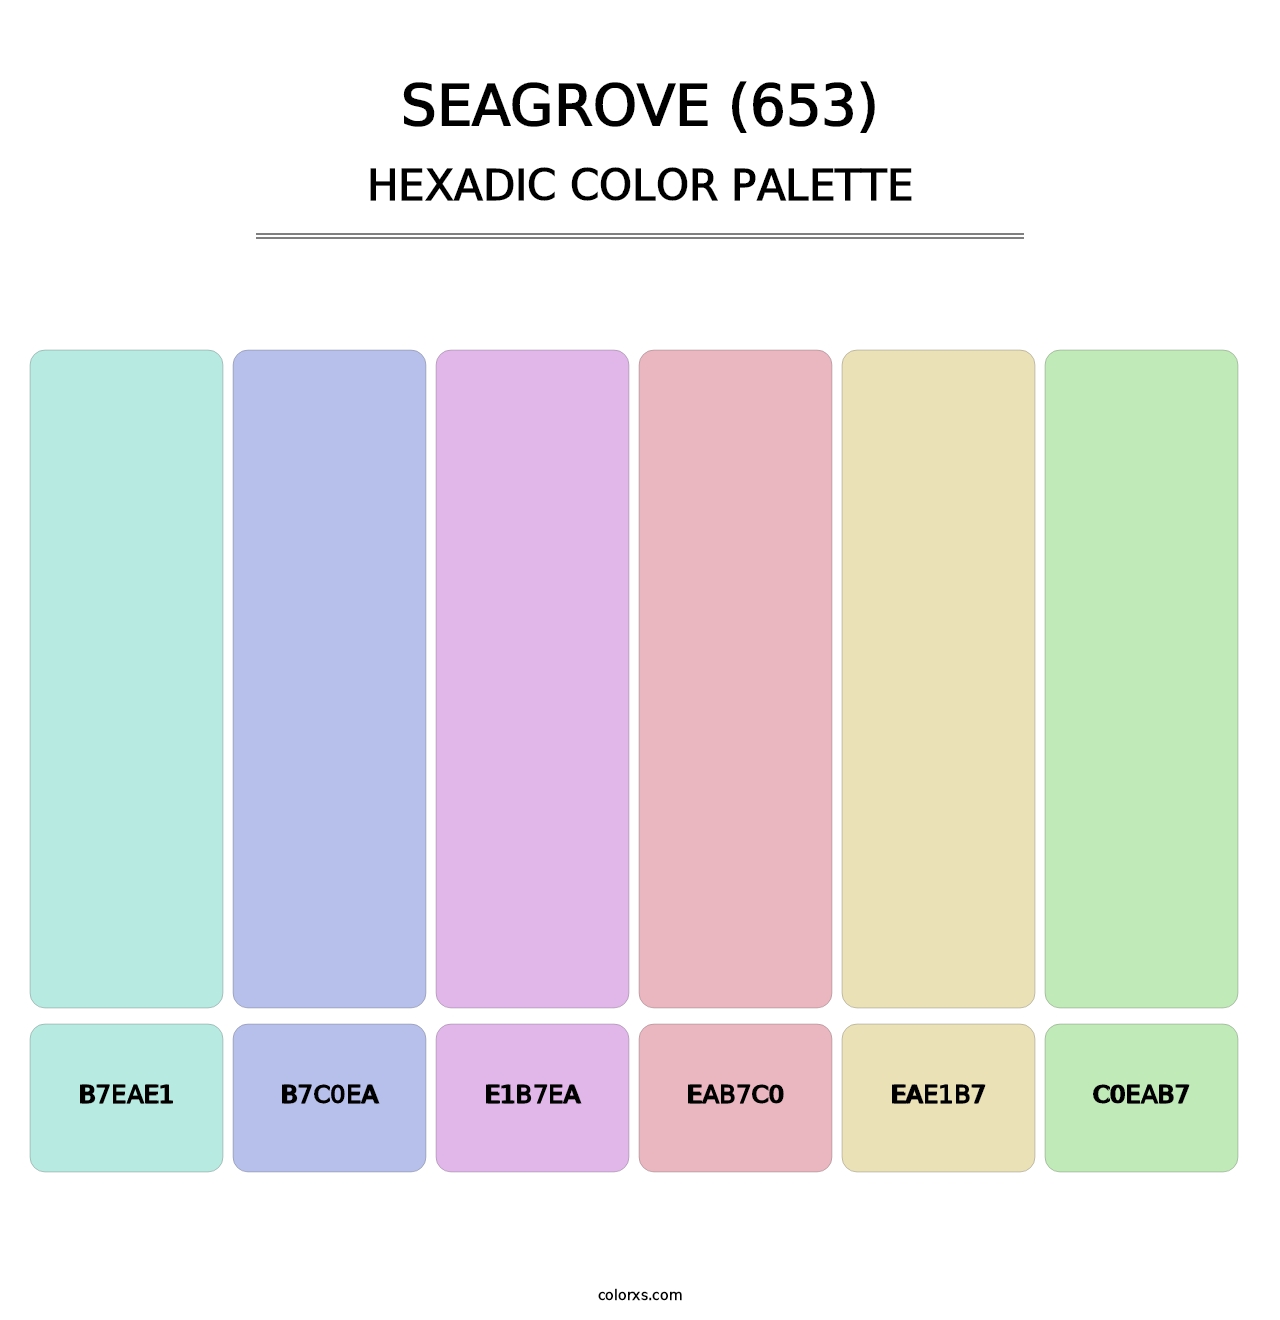 Seagrove (653) - Hexadic Color Palette